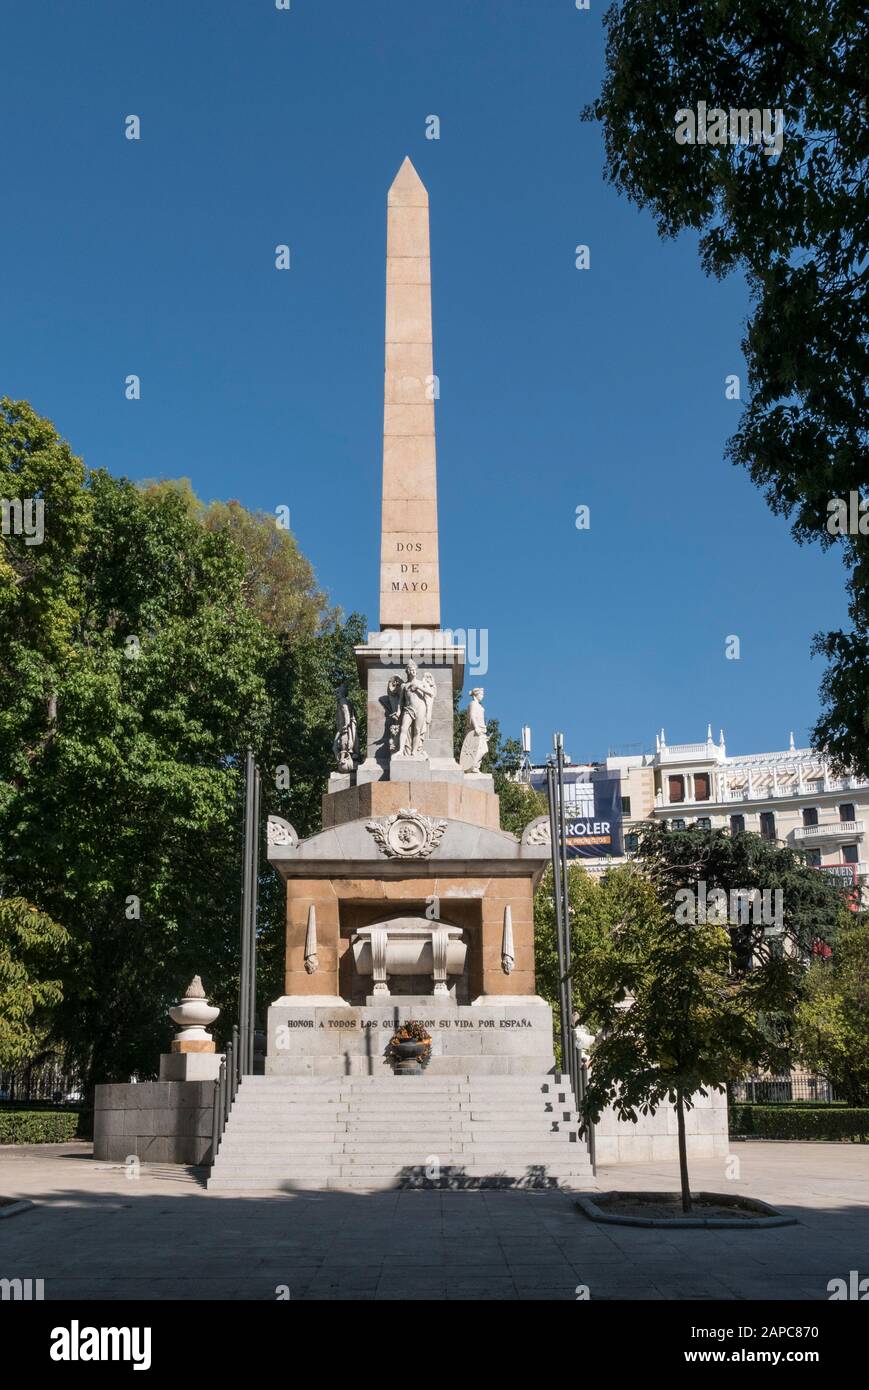 Monumento dos de Mayo, Madrid, España Foto de stock